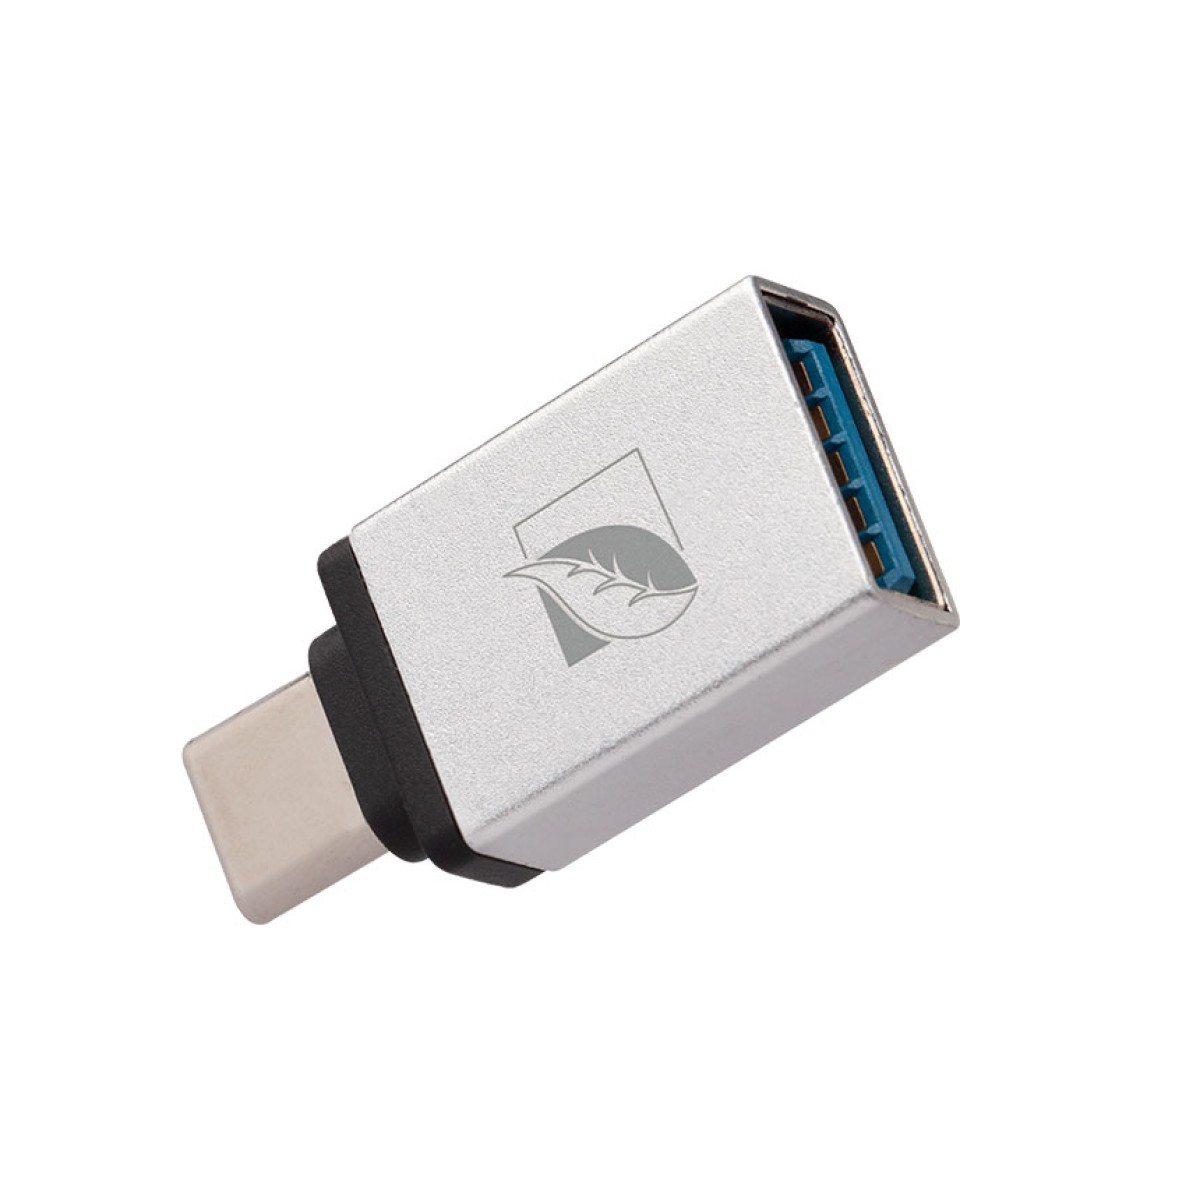 Adaptador OTG Tipo C a USB y TIPO C HEMBRA – TJ ELECTRONICA, Electronica  en general